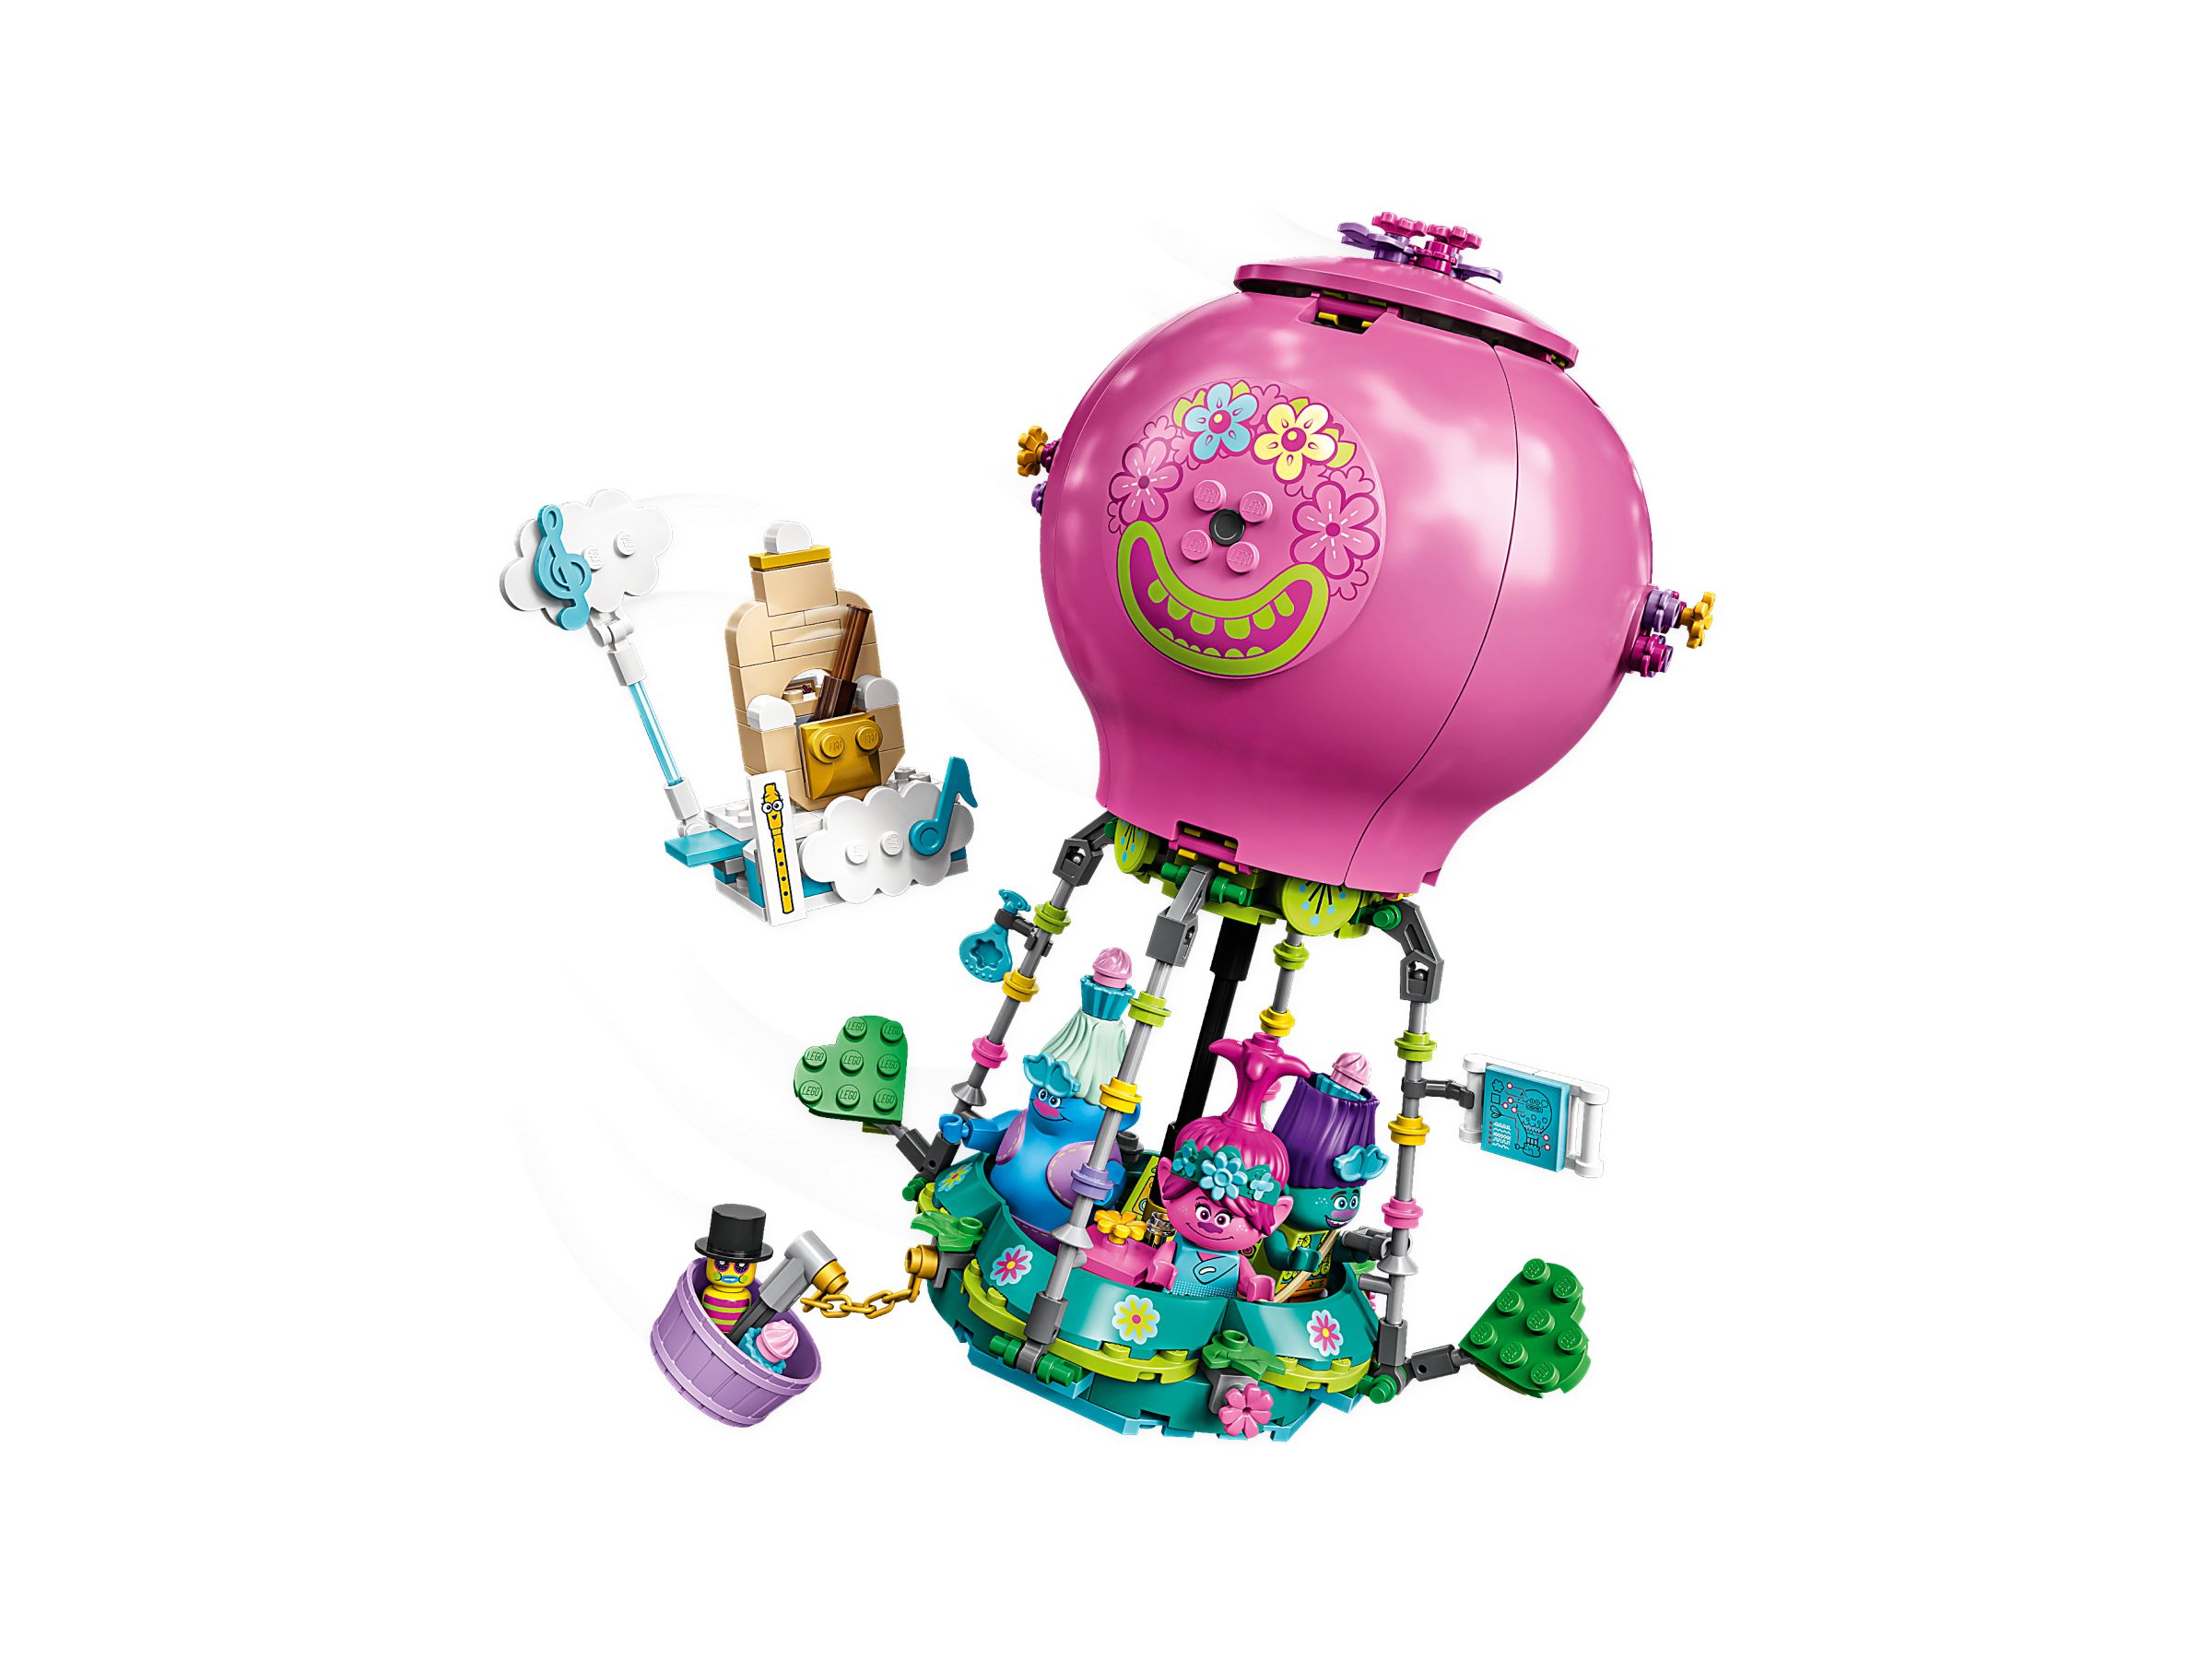 LEGO Trolls: World Tour 41252 Poppys Heißluftballon LEGO_41252_alt2.jpg